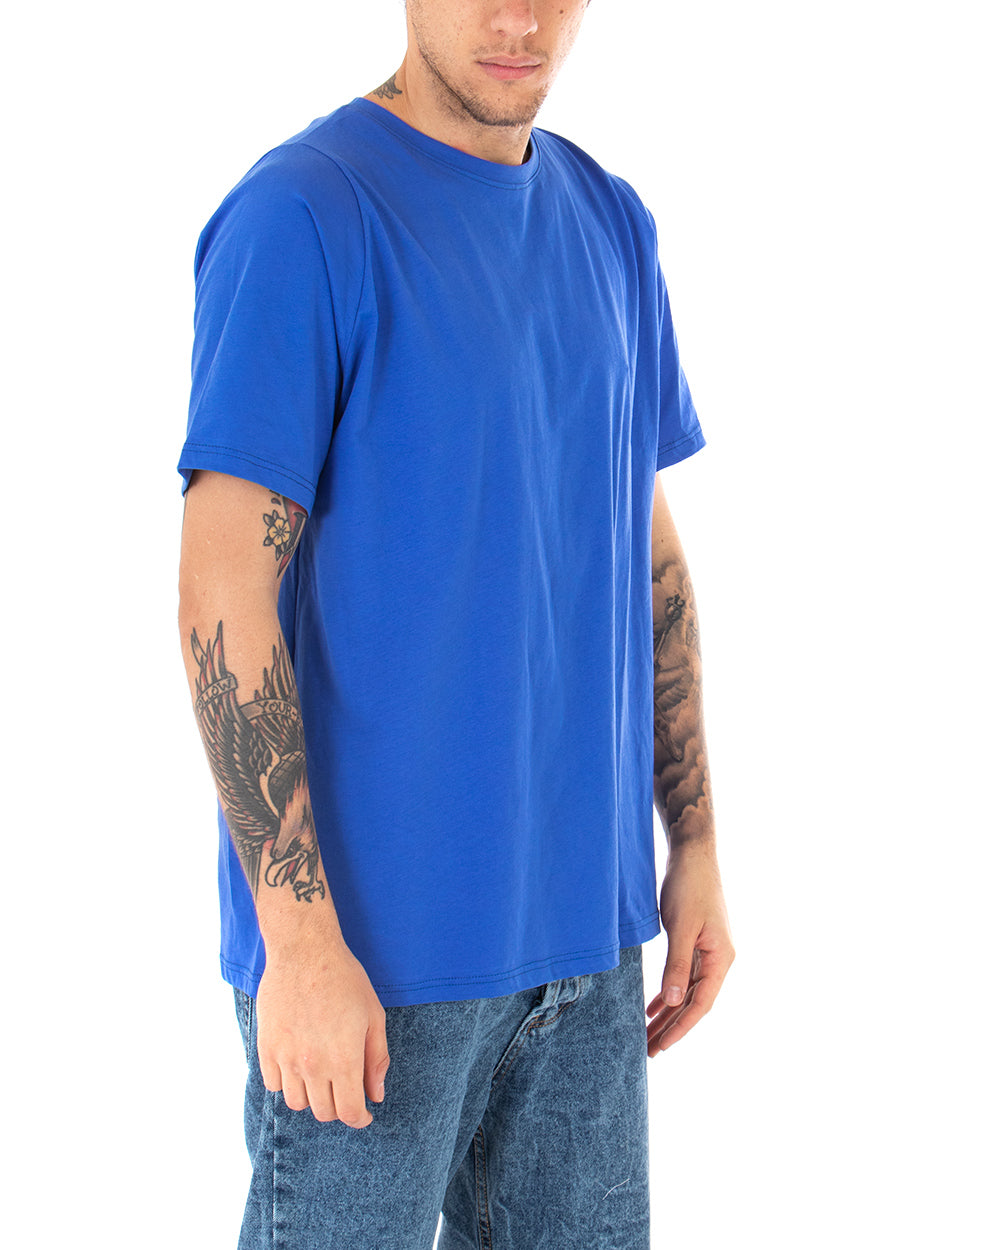 T-shirt Uomo Oversize Girocollo Tinta Unita Casual Blu Royal Basic Manica Corta GIOSAL-TS2925A